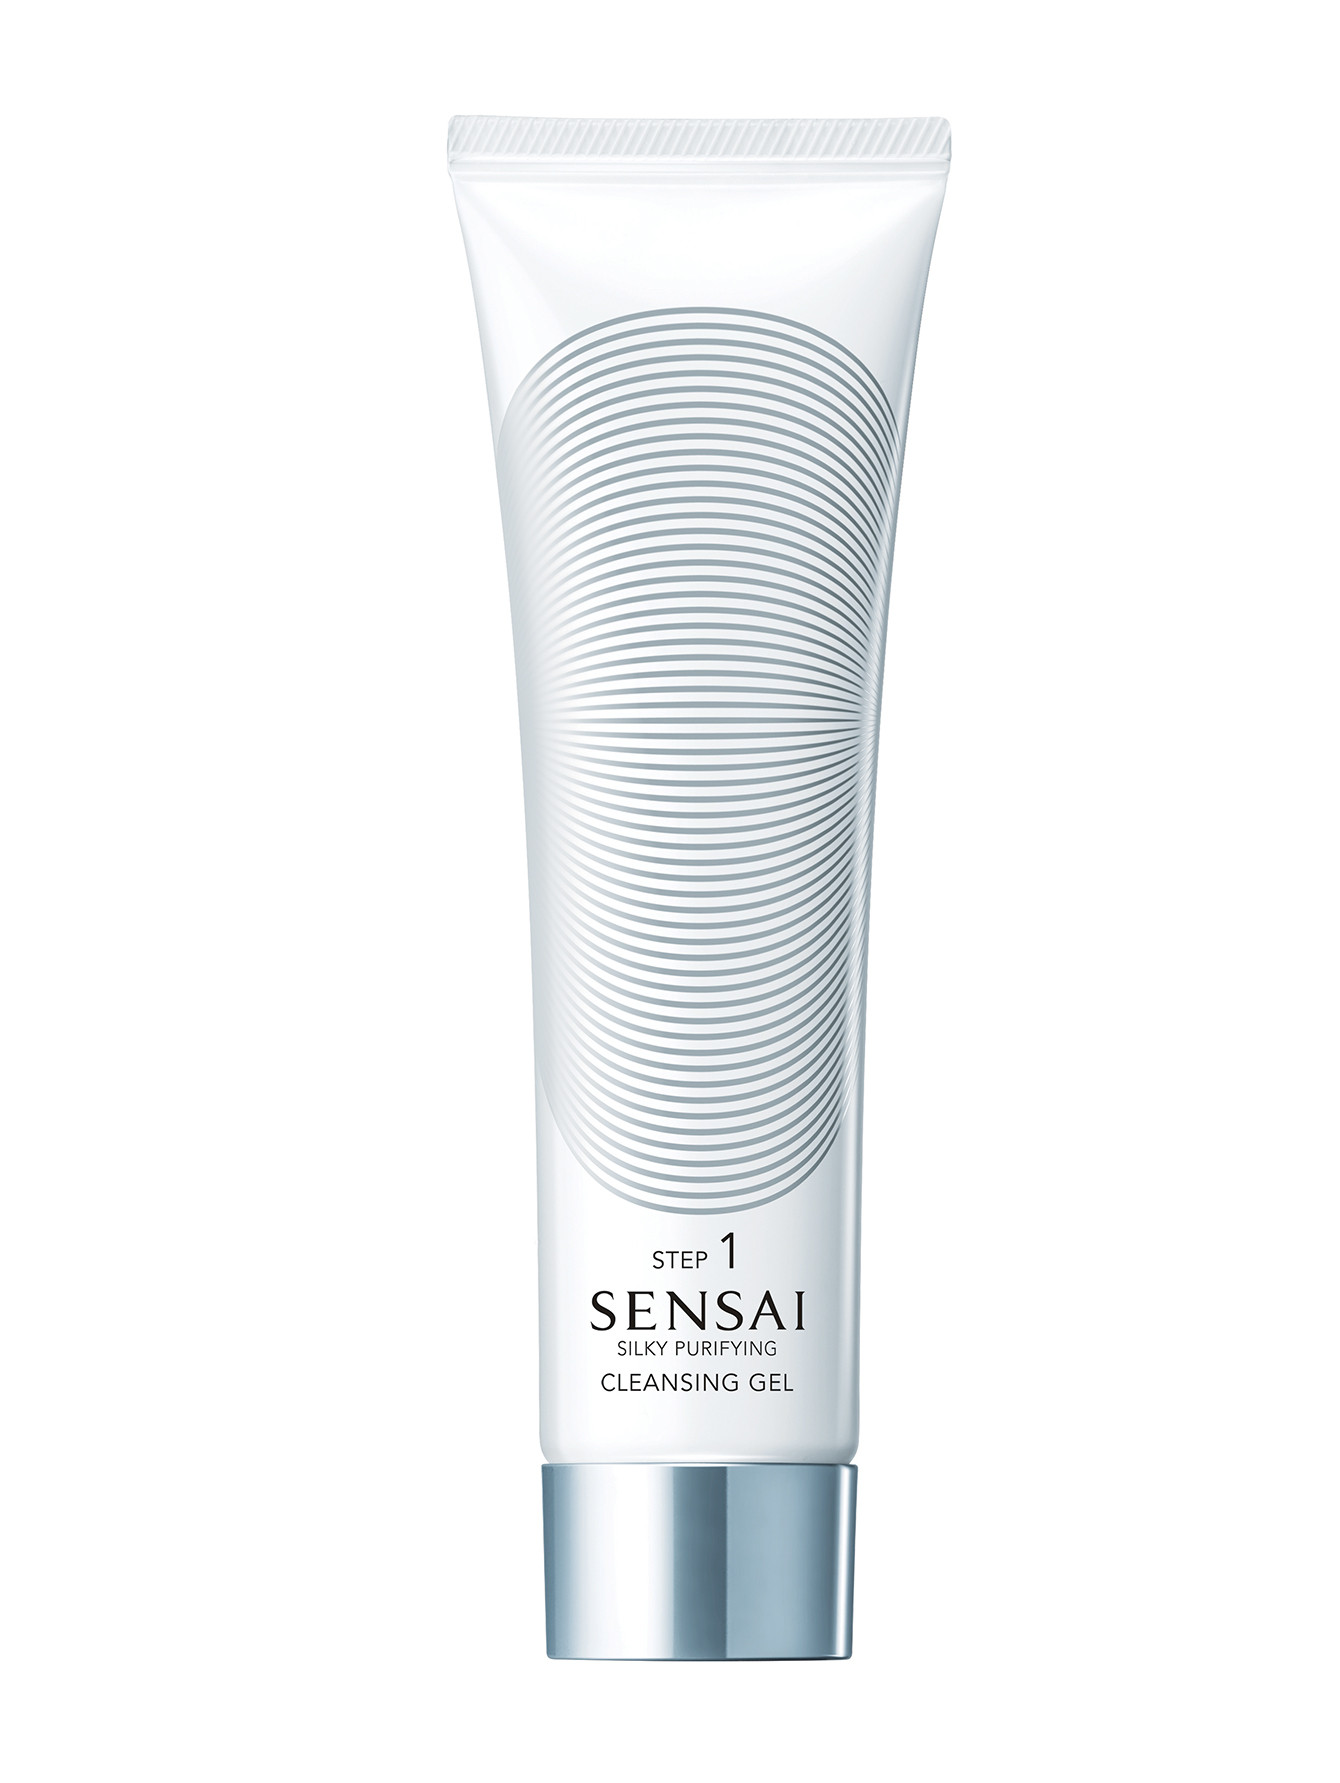 Очищающий гель для лица - Sensai Silky Purifying, 125ml - Общий вид